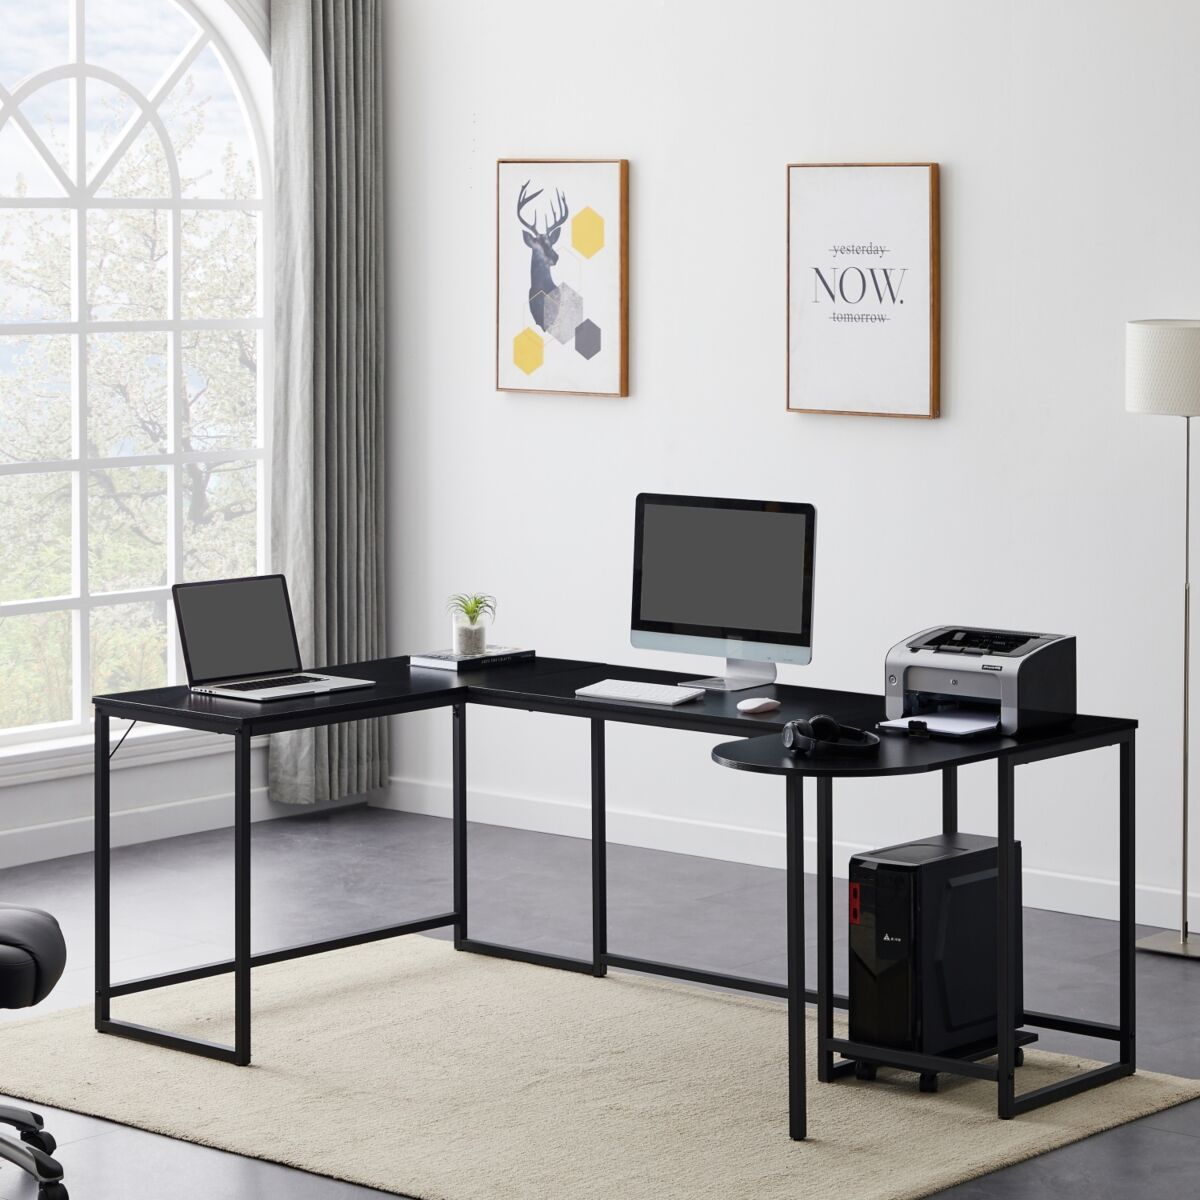 Simplie Fun U-shaped Computer Desk, Industrial Corner Writing Desk with Cpu Stand, Gaming Table Workstation Desk for Home Office (Black) - Black